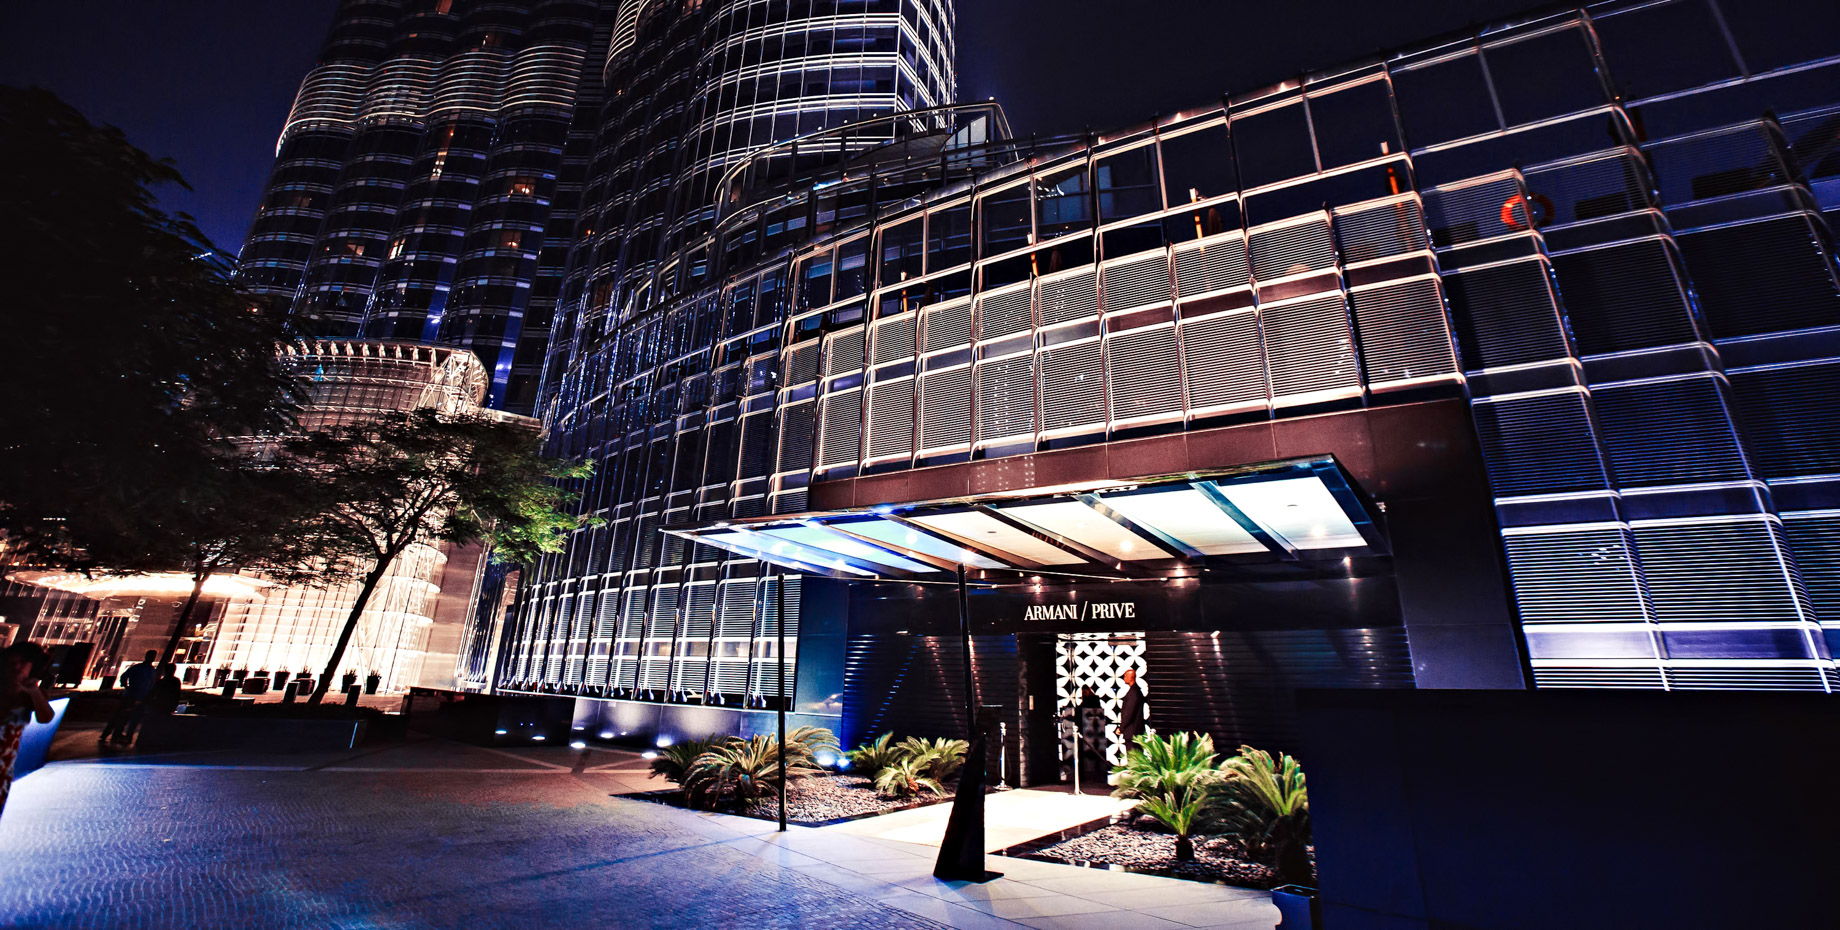 Armani Hotel Dubai - Burj Khalifa, Dubai, UAE - Burj Khalifa Armani Prive Night Club